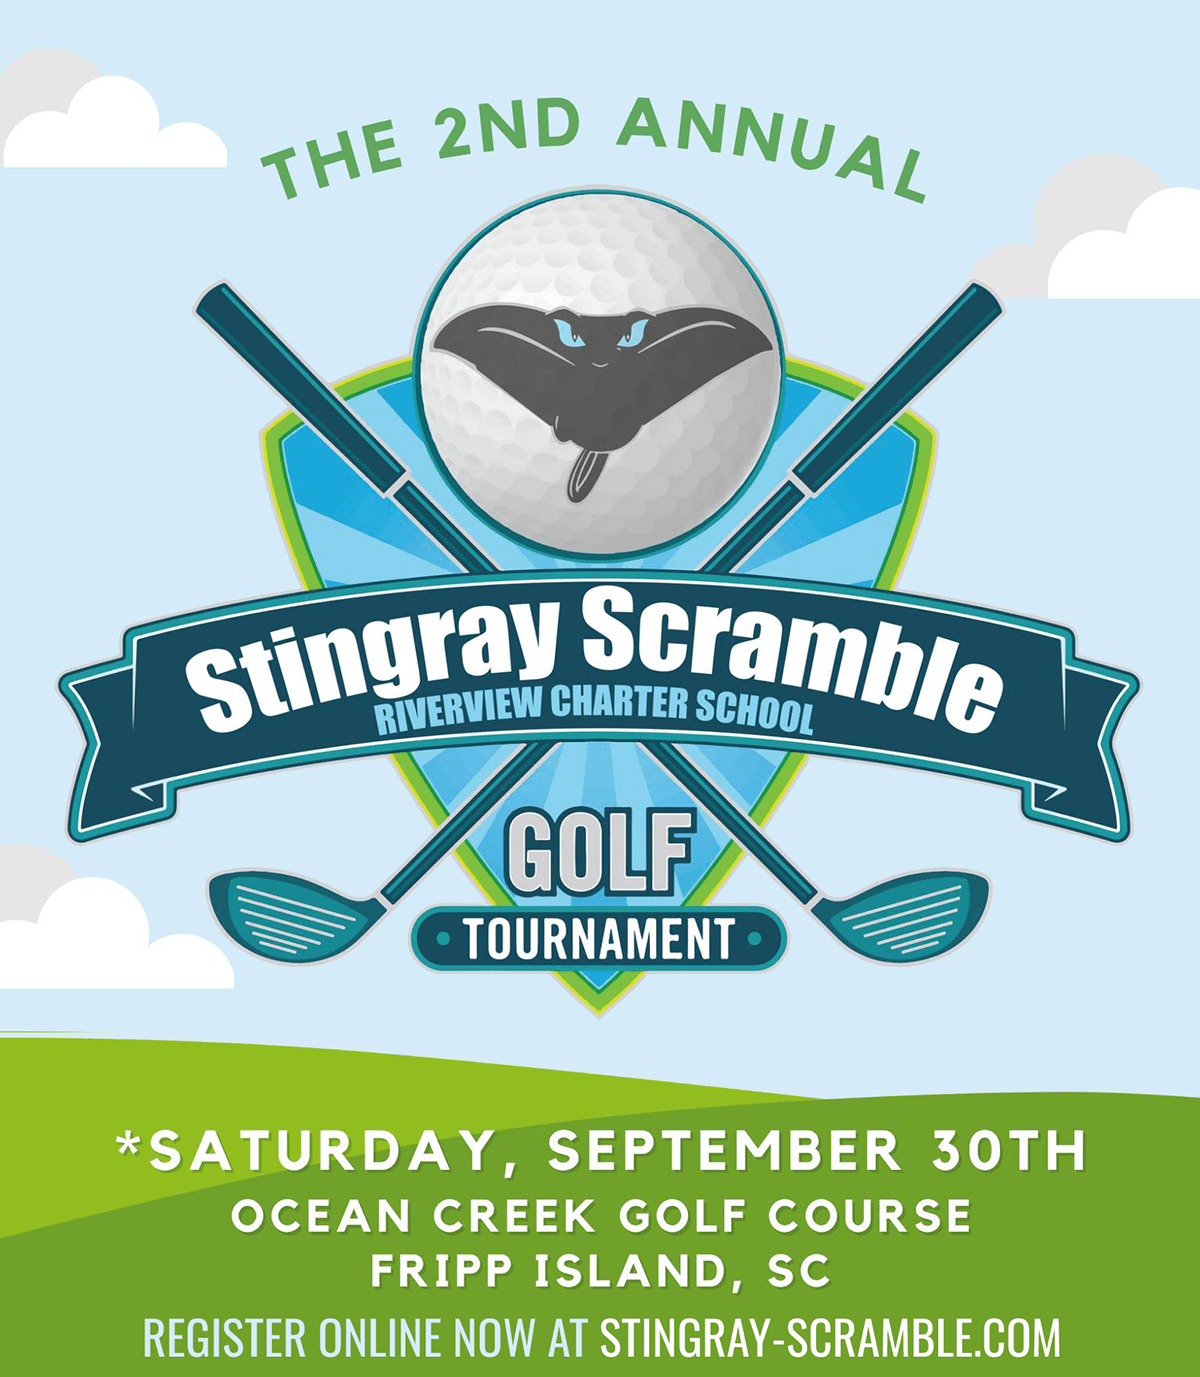 Play Golf at the Stingray Scramble Golf Tournament on Fripp Island, September 30th, 2023